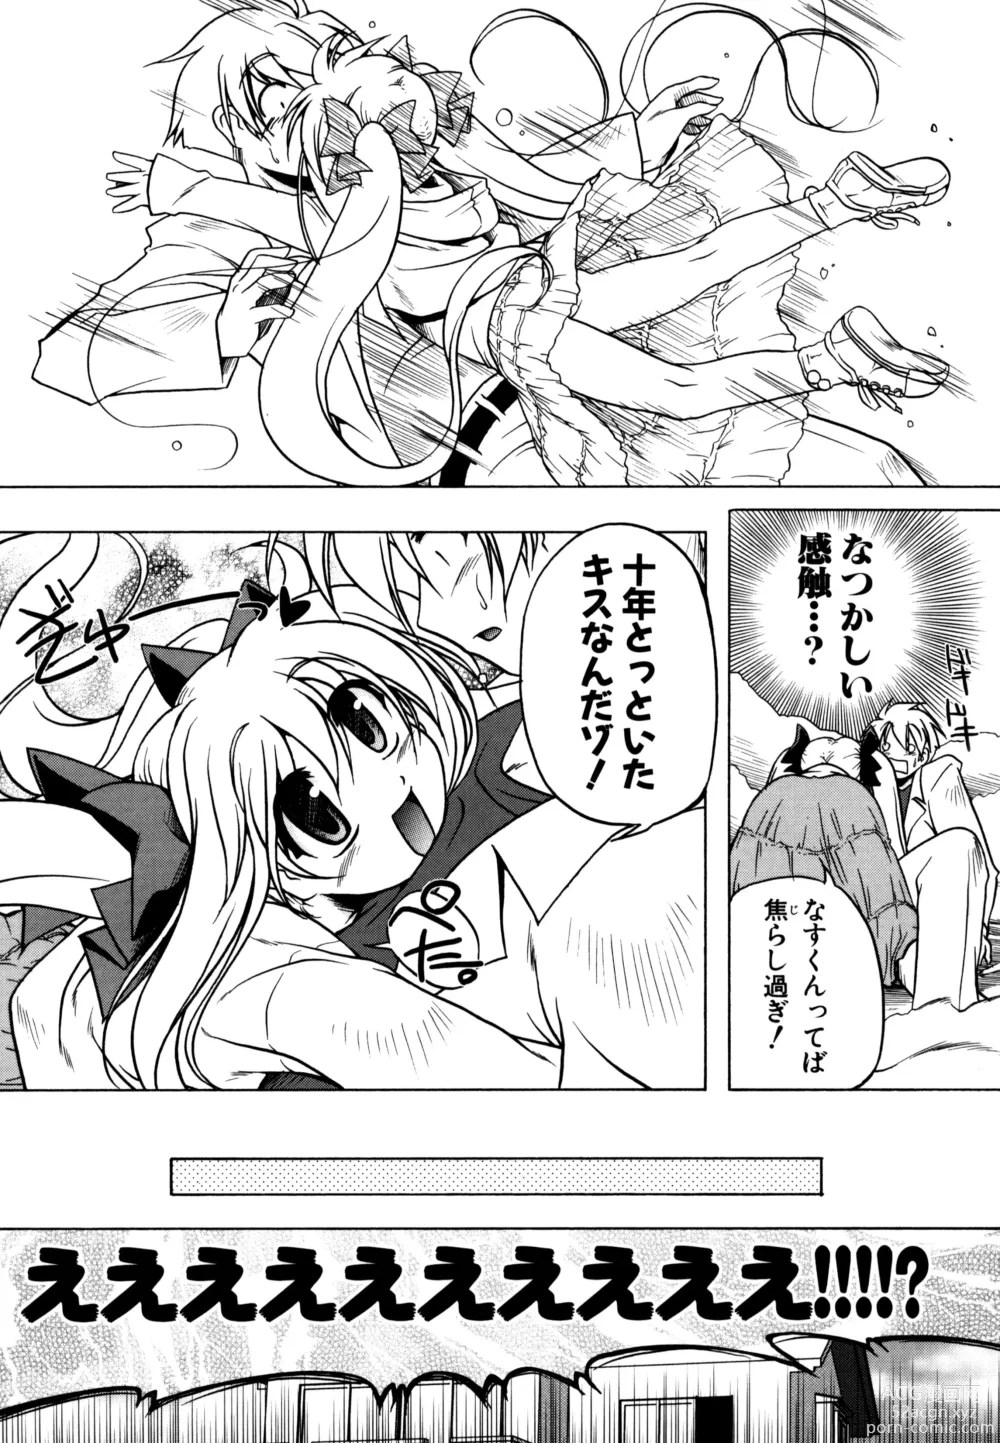 Page 8 of manga Pink Panzer